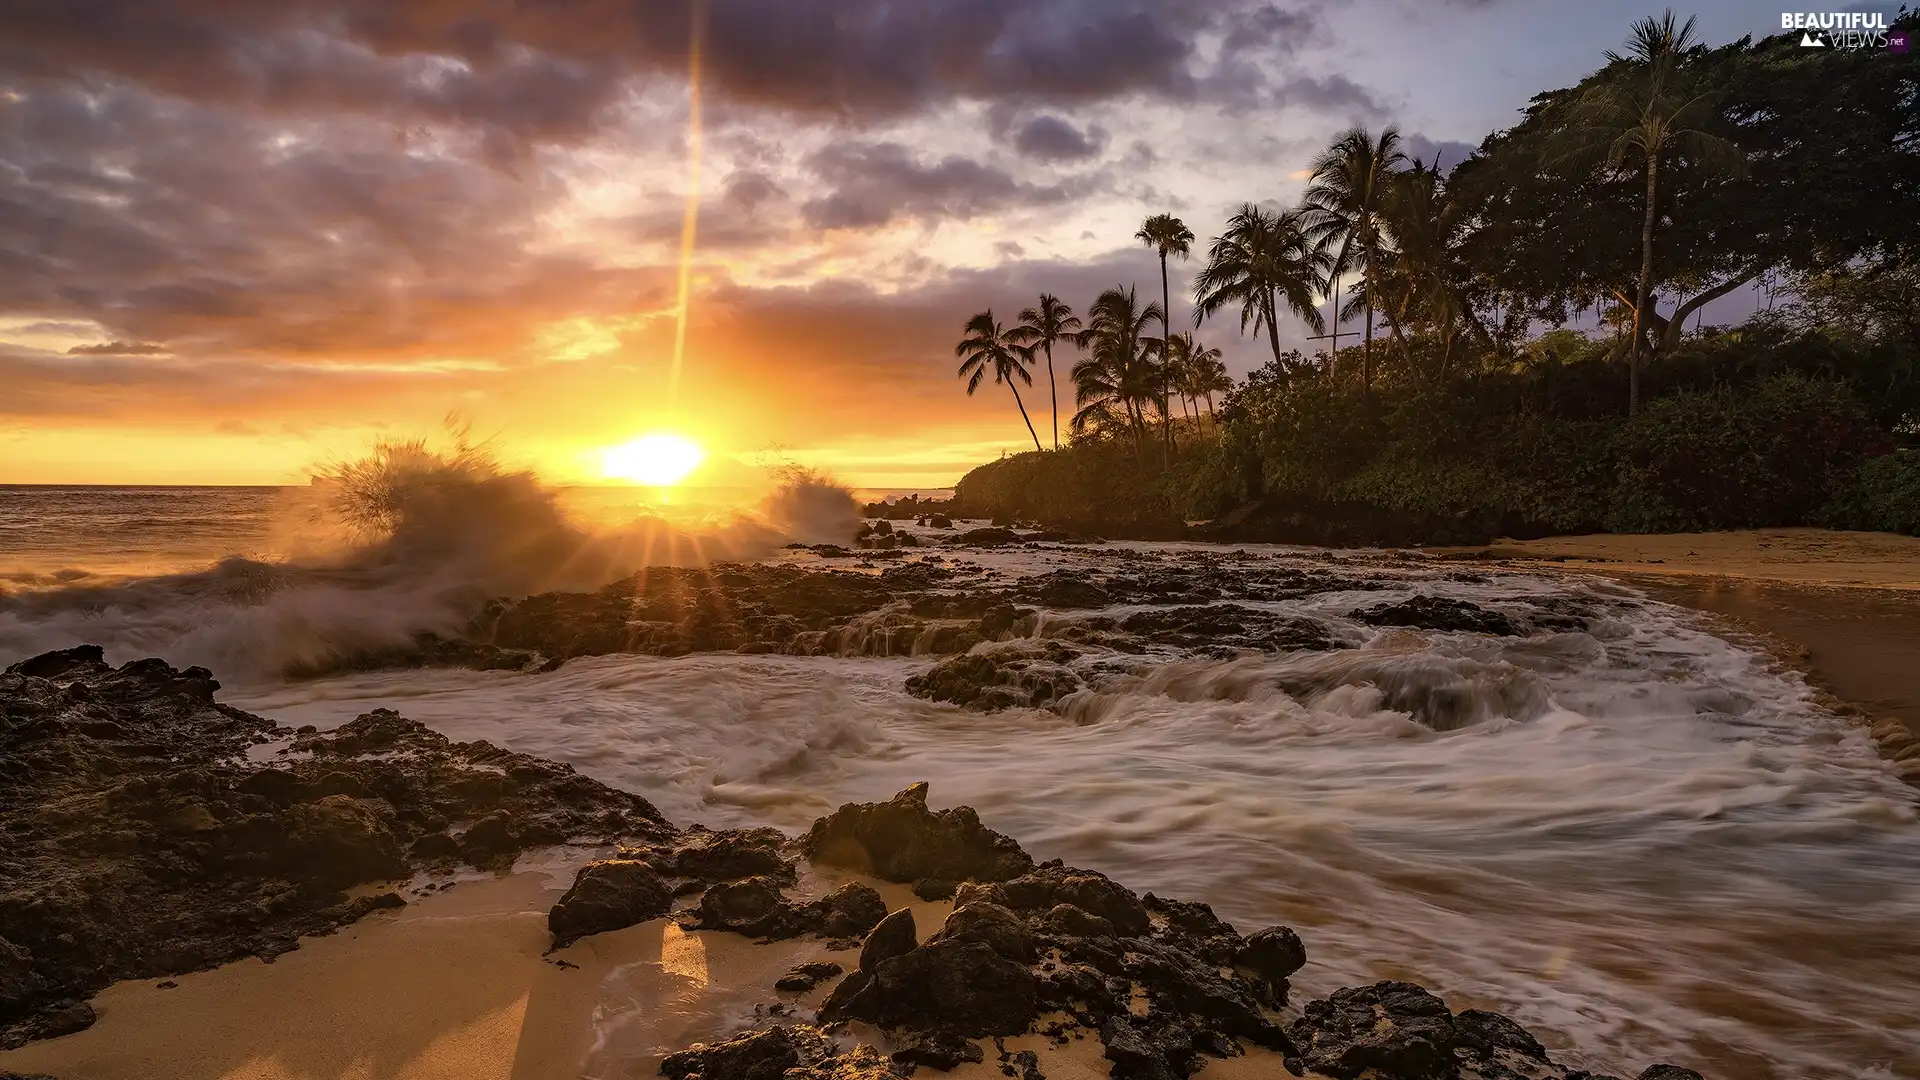 Aloha State Hawaje, The United States, Maui Island, sea, Palms, rocks, Great Sunsets, Beaches, Tides